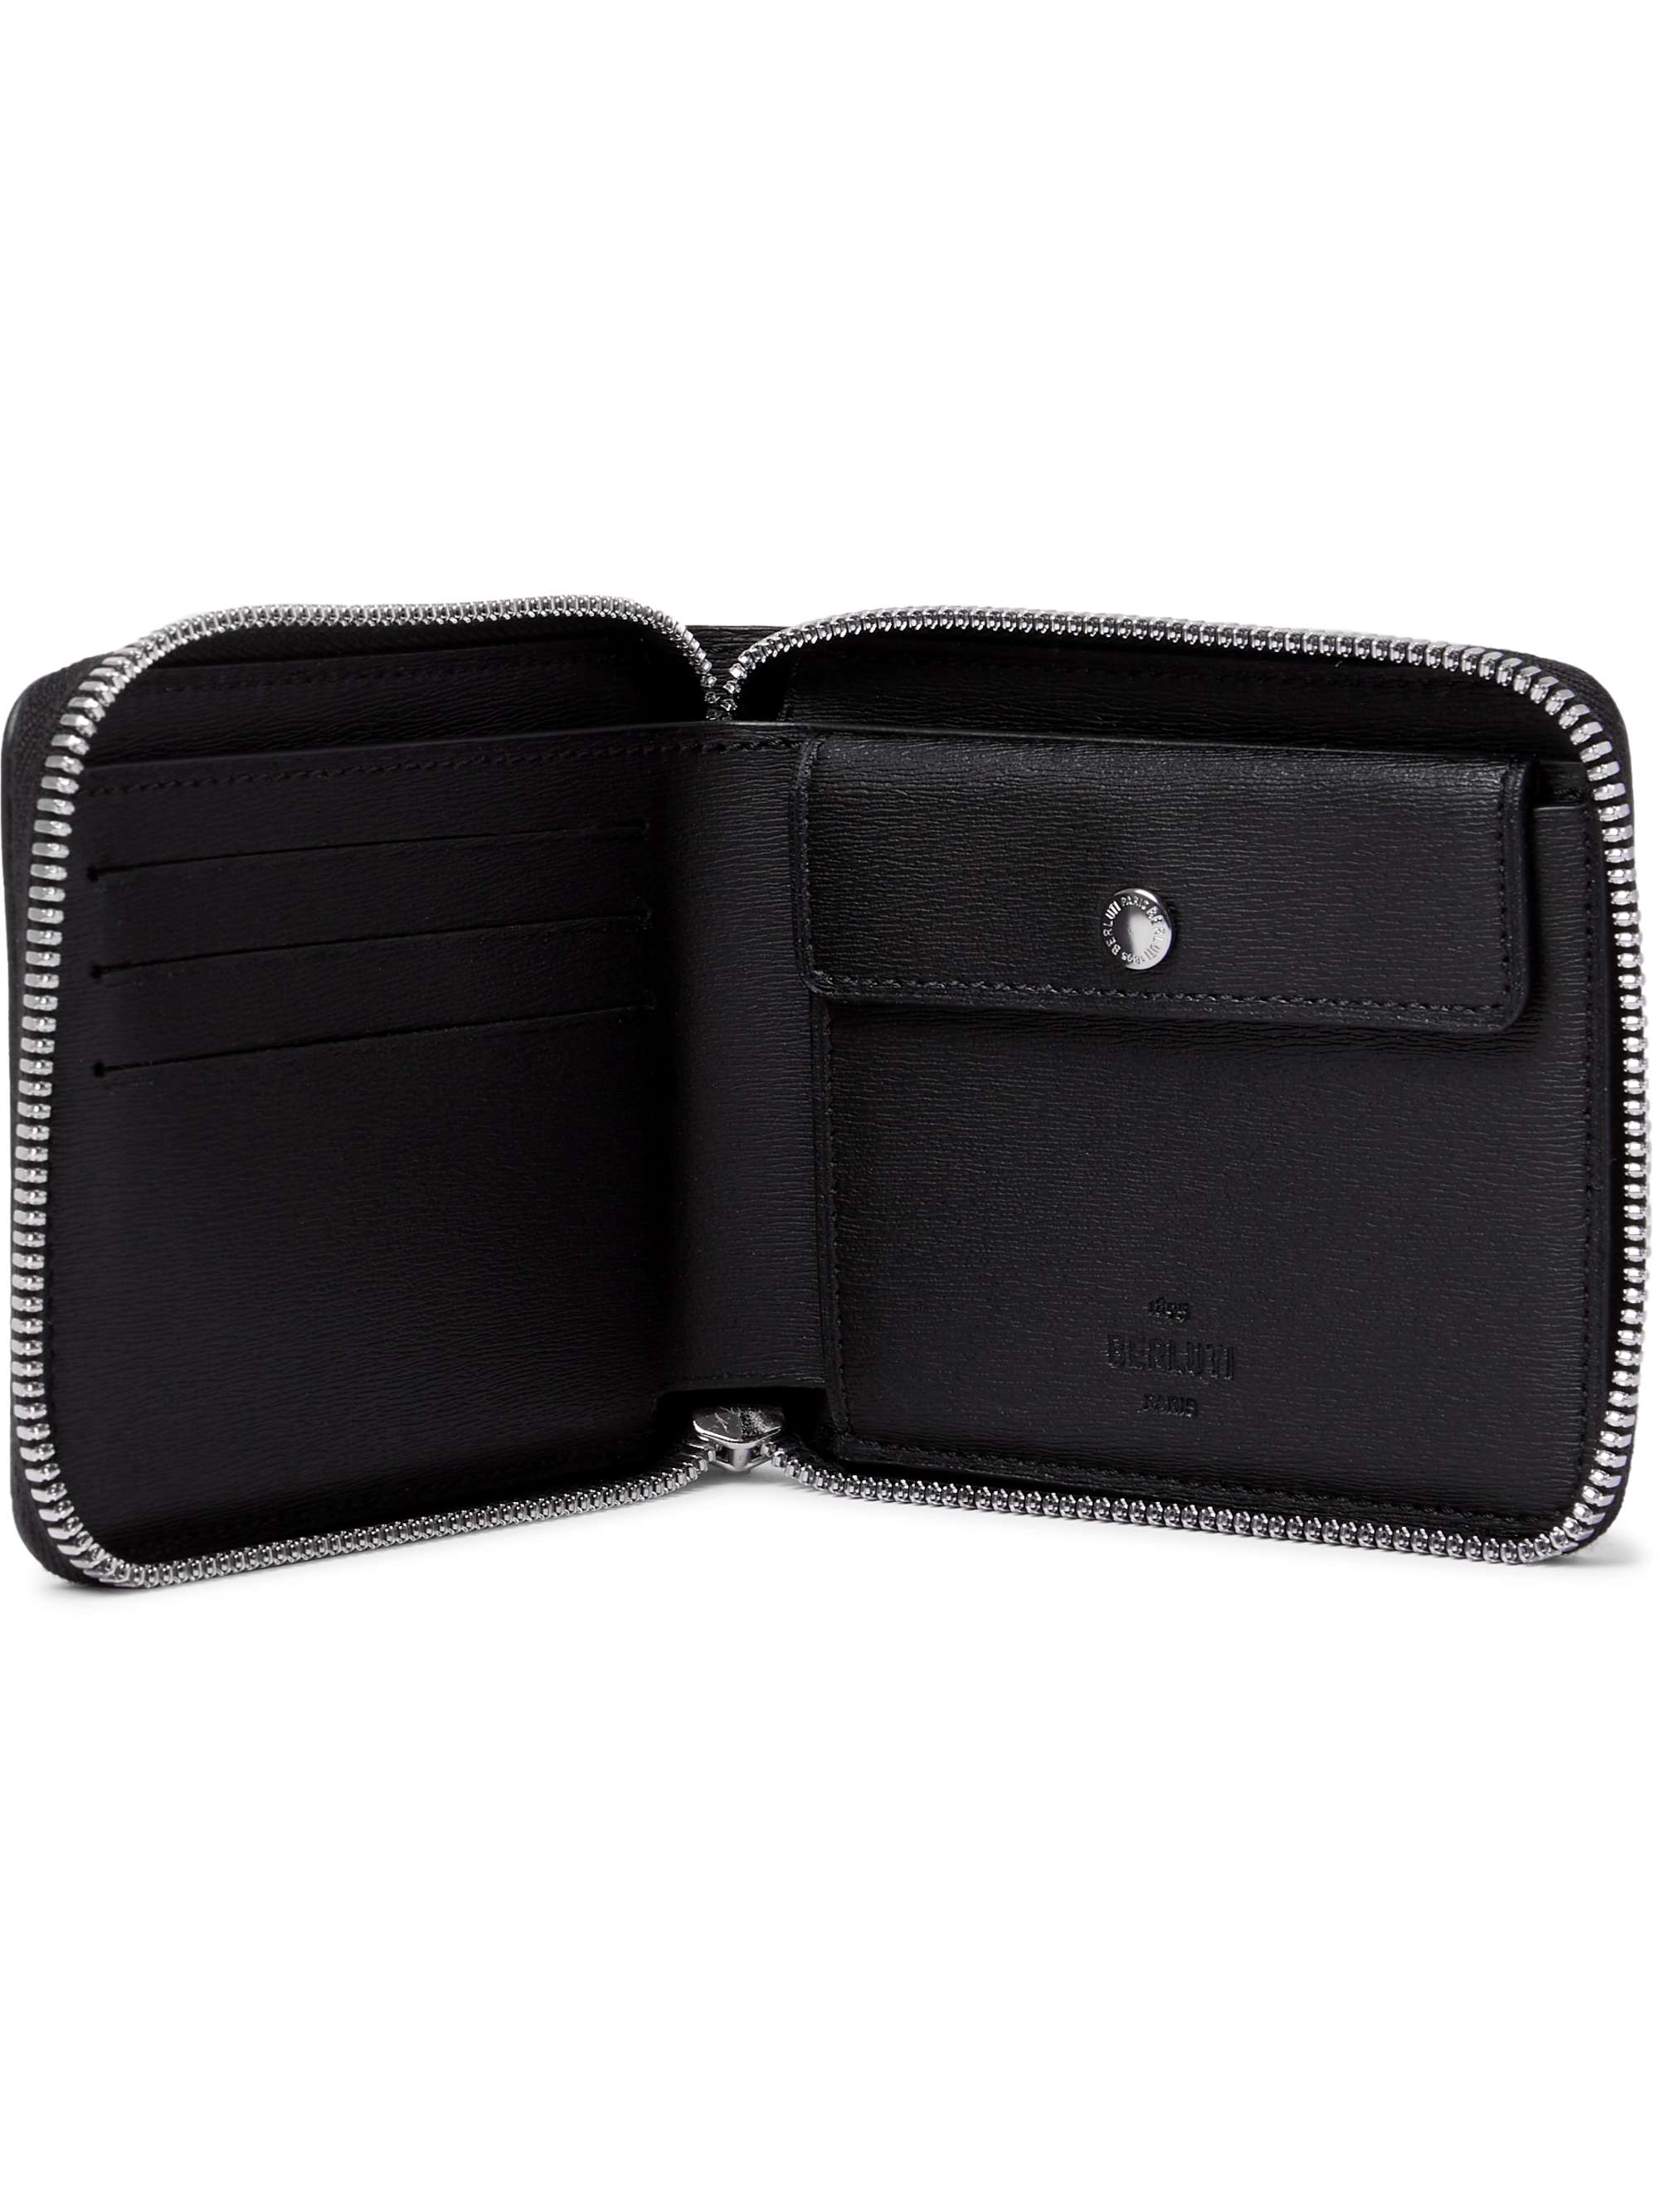 BERLUTI Scritto Venezia Leather Zip-Around Wallet